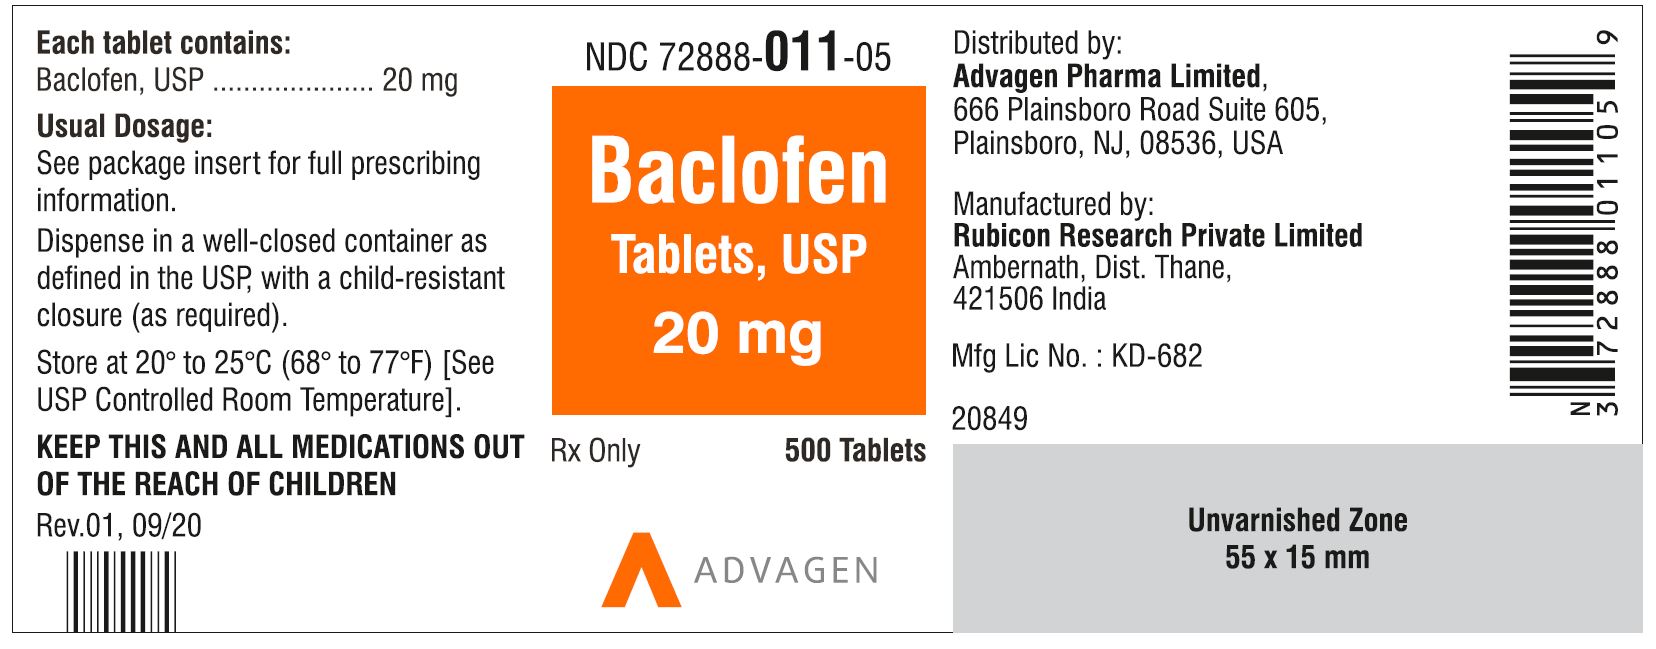 NDC 72888-011-05 - Baclofen Tablets, USP 20 mg - 500 Tablets